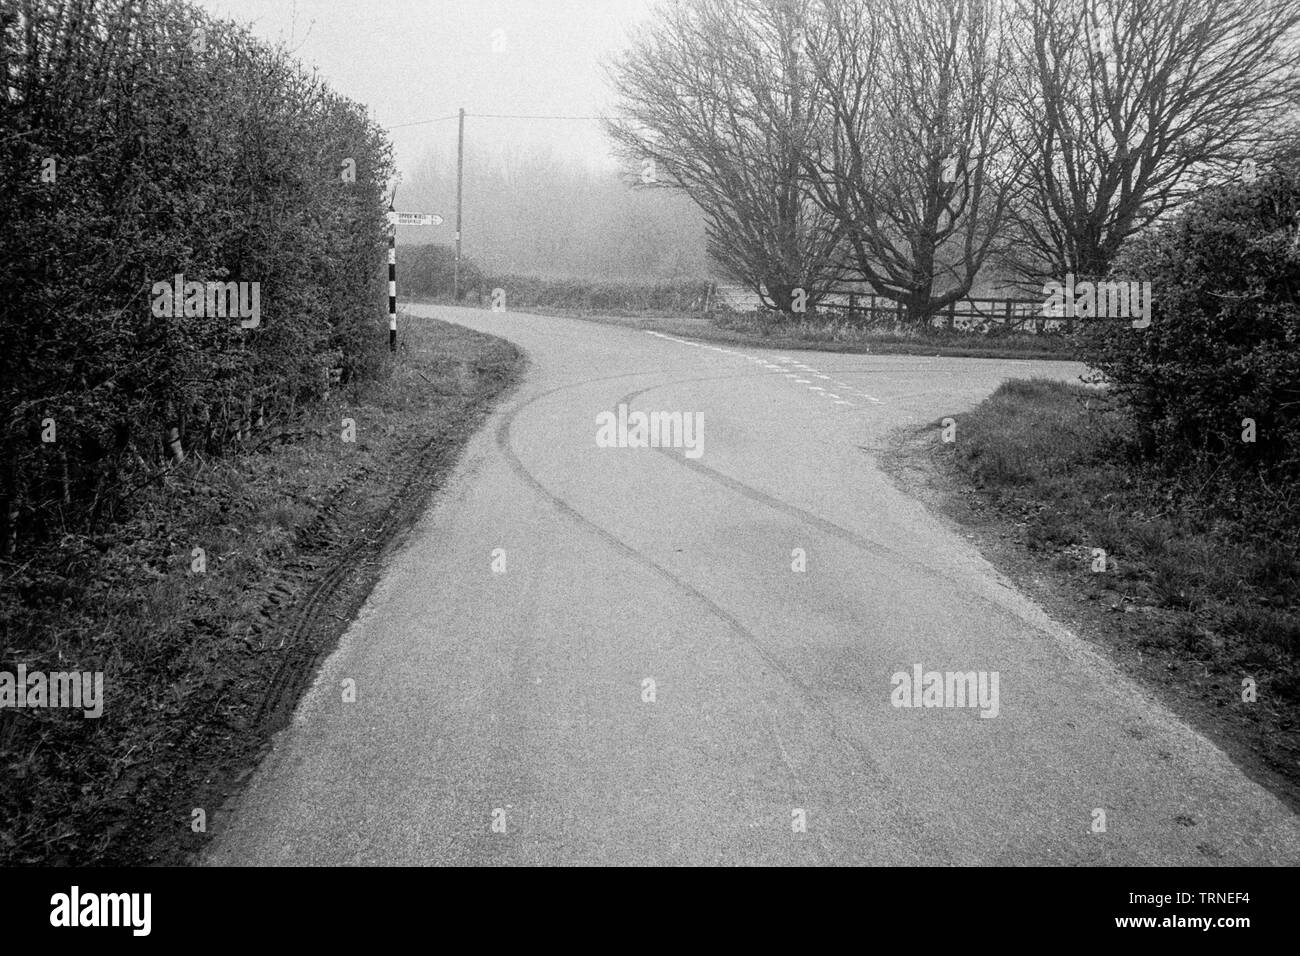 Tyre marks on the road ,Hattingley Road, Medstead, Alton, Hampshire, England, United Kingdom Stock Photo